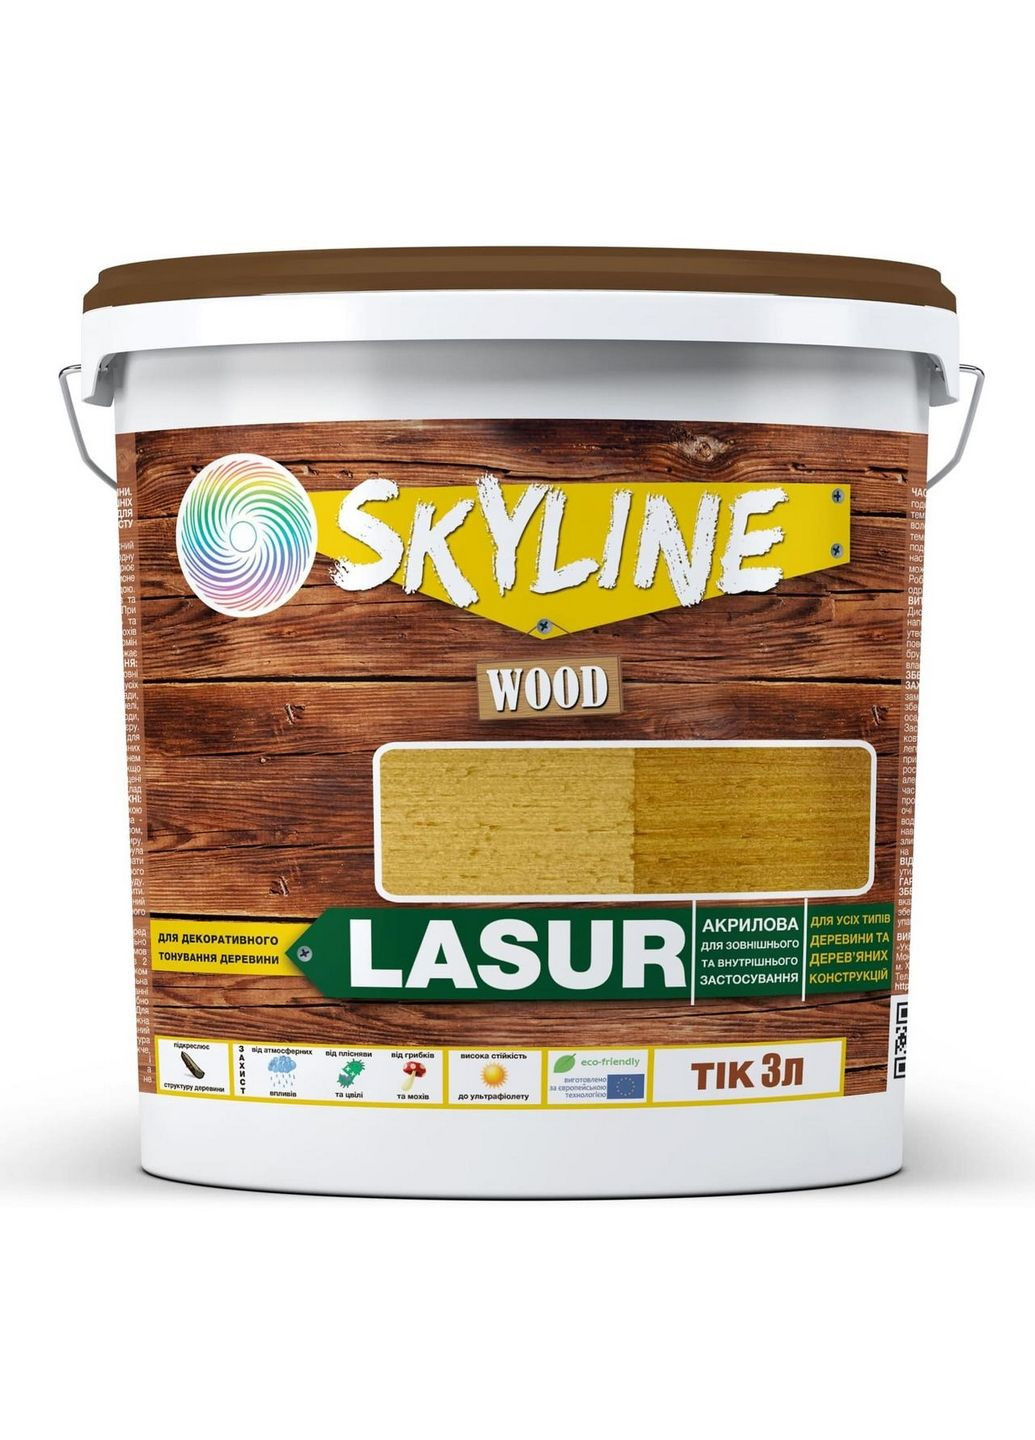 Лазурь декоративно-защитная для обработки дерева LASUR Wood Тик 3л SkyLine (283327675)